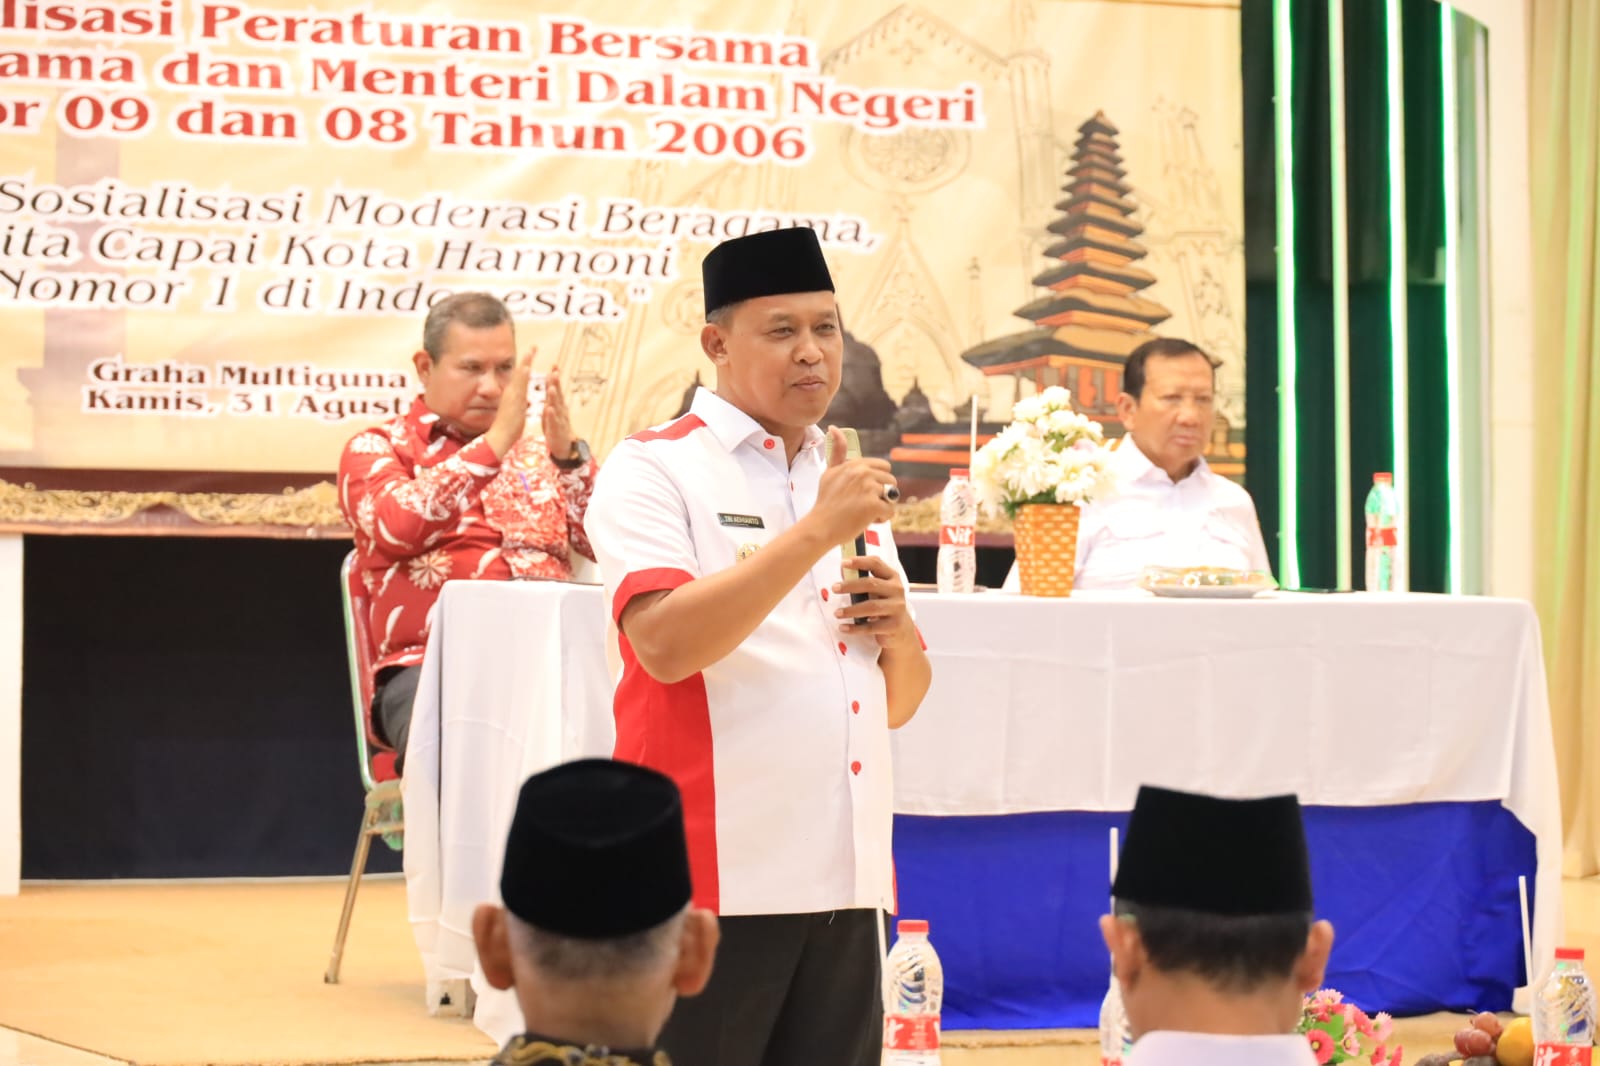 Hadiri Sosialisasi PBM oleh FKUB, Tri Adhianto Harap Agar Harmonisasi Terus Terjaga di Kota Bekasi